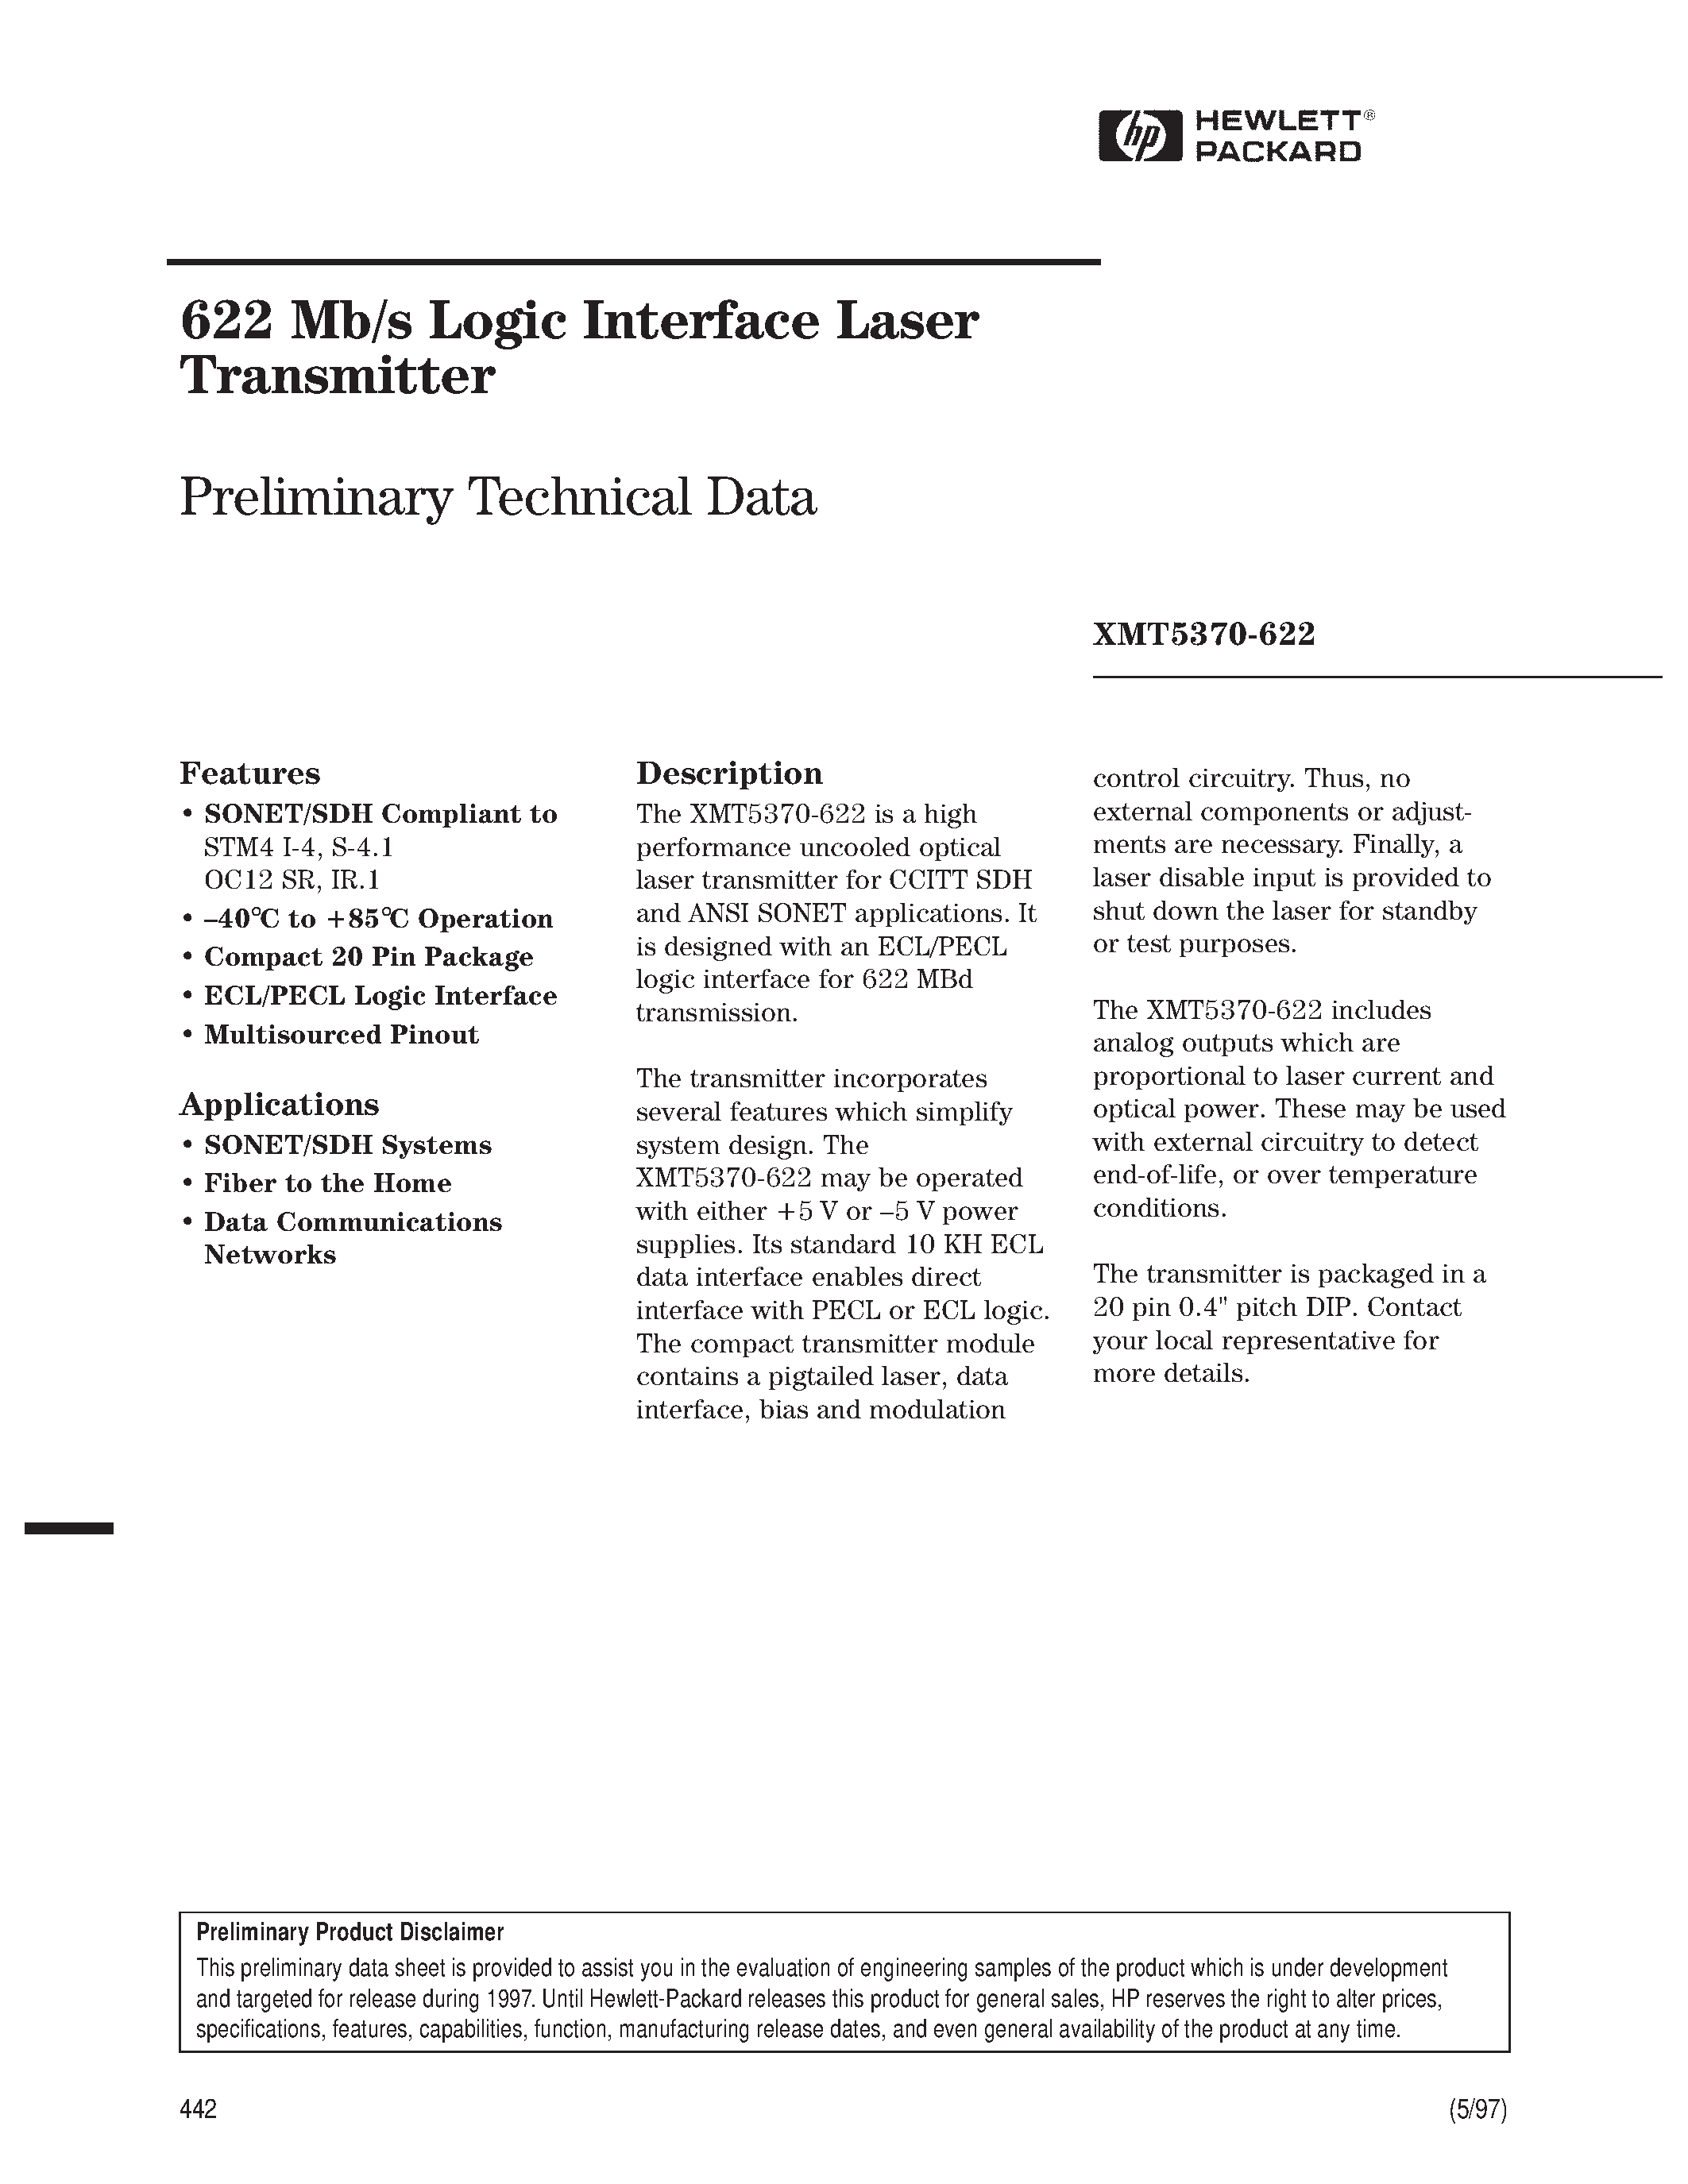 Datasheet XMT5360A-155-ST - 622 Mb/s Logic Interface Laser Transmitter page 1